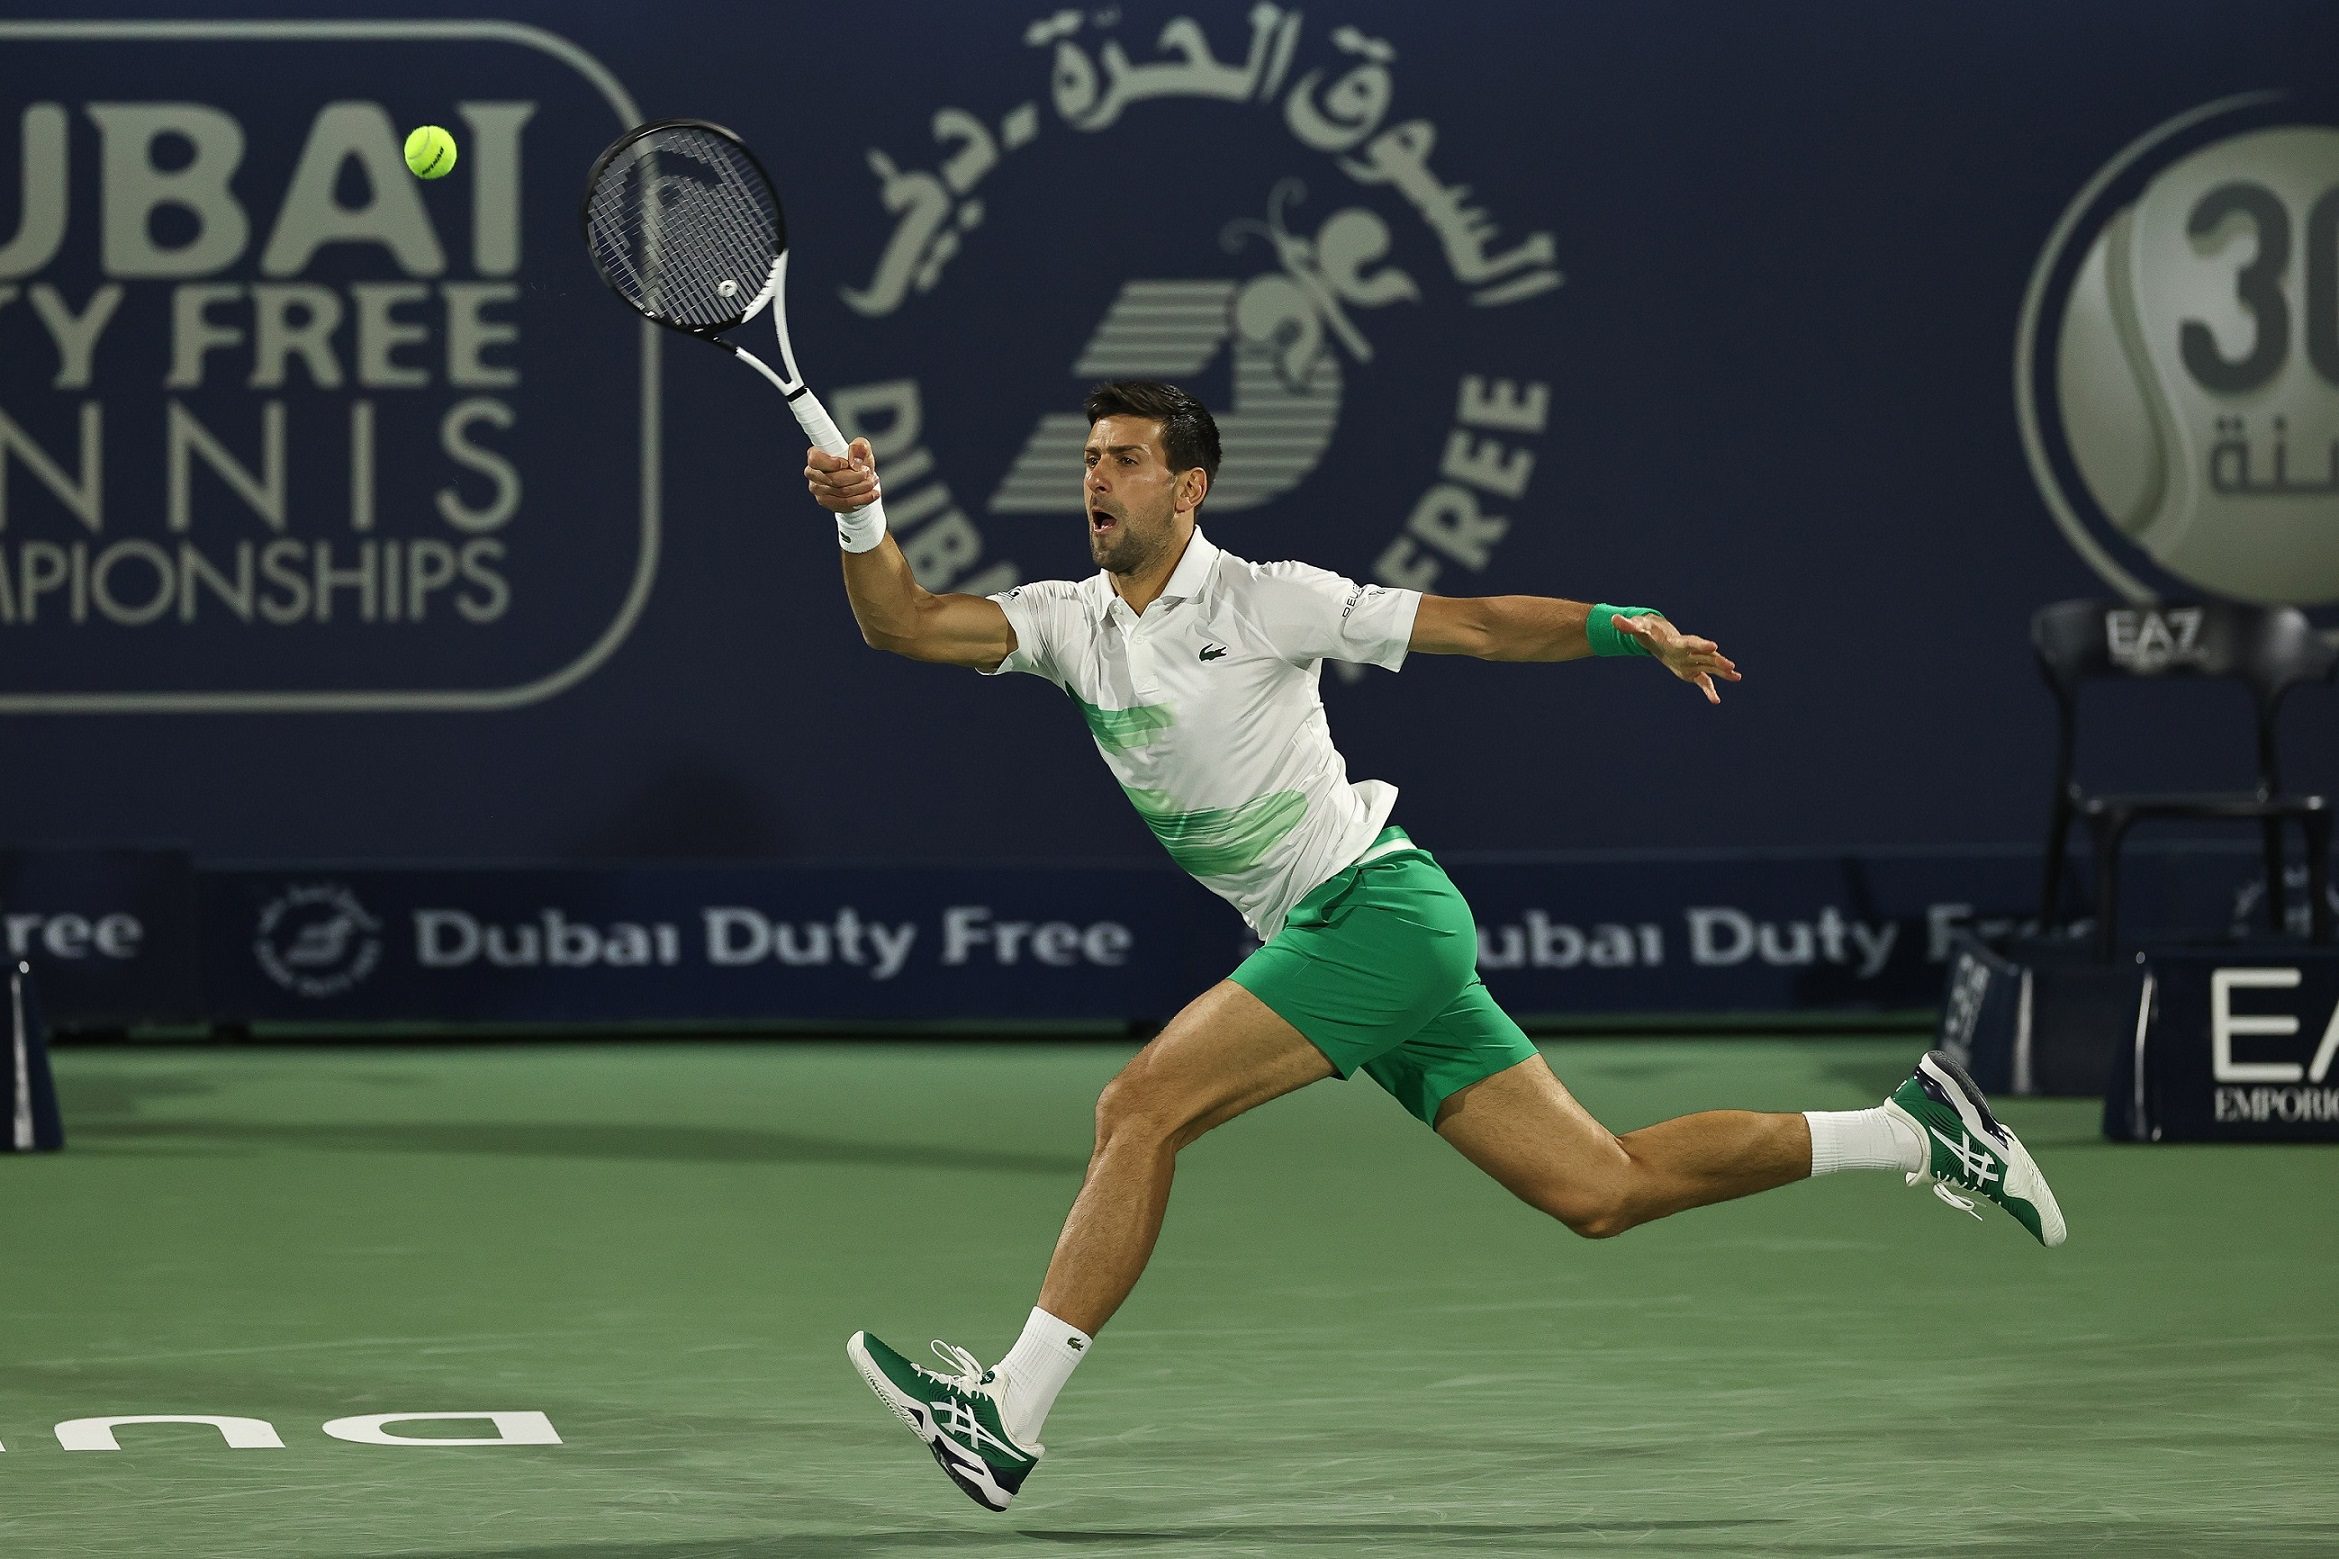 World No.5 Novak Djokovic to join the impressive ATP line up at Dubai Duty Free Tennis Championships